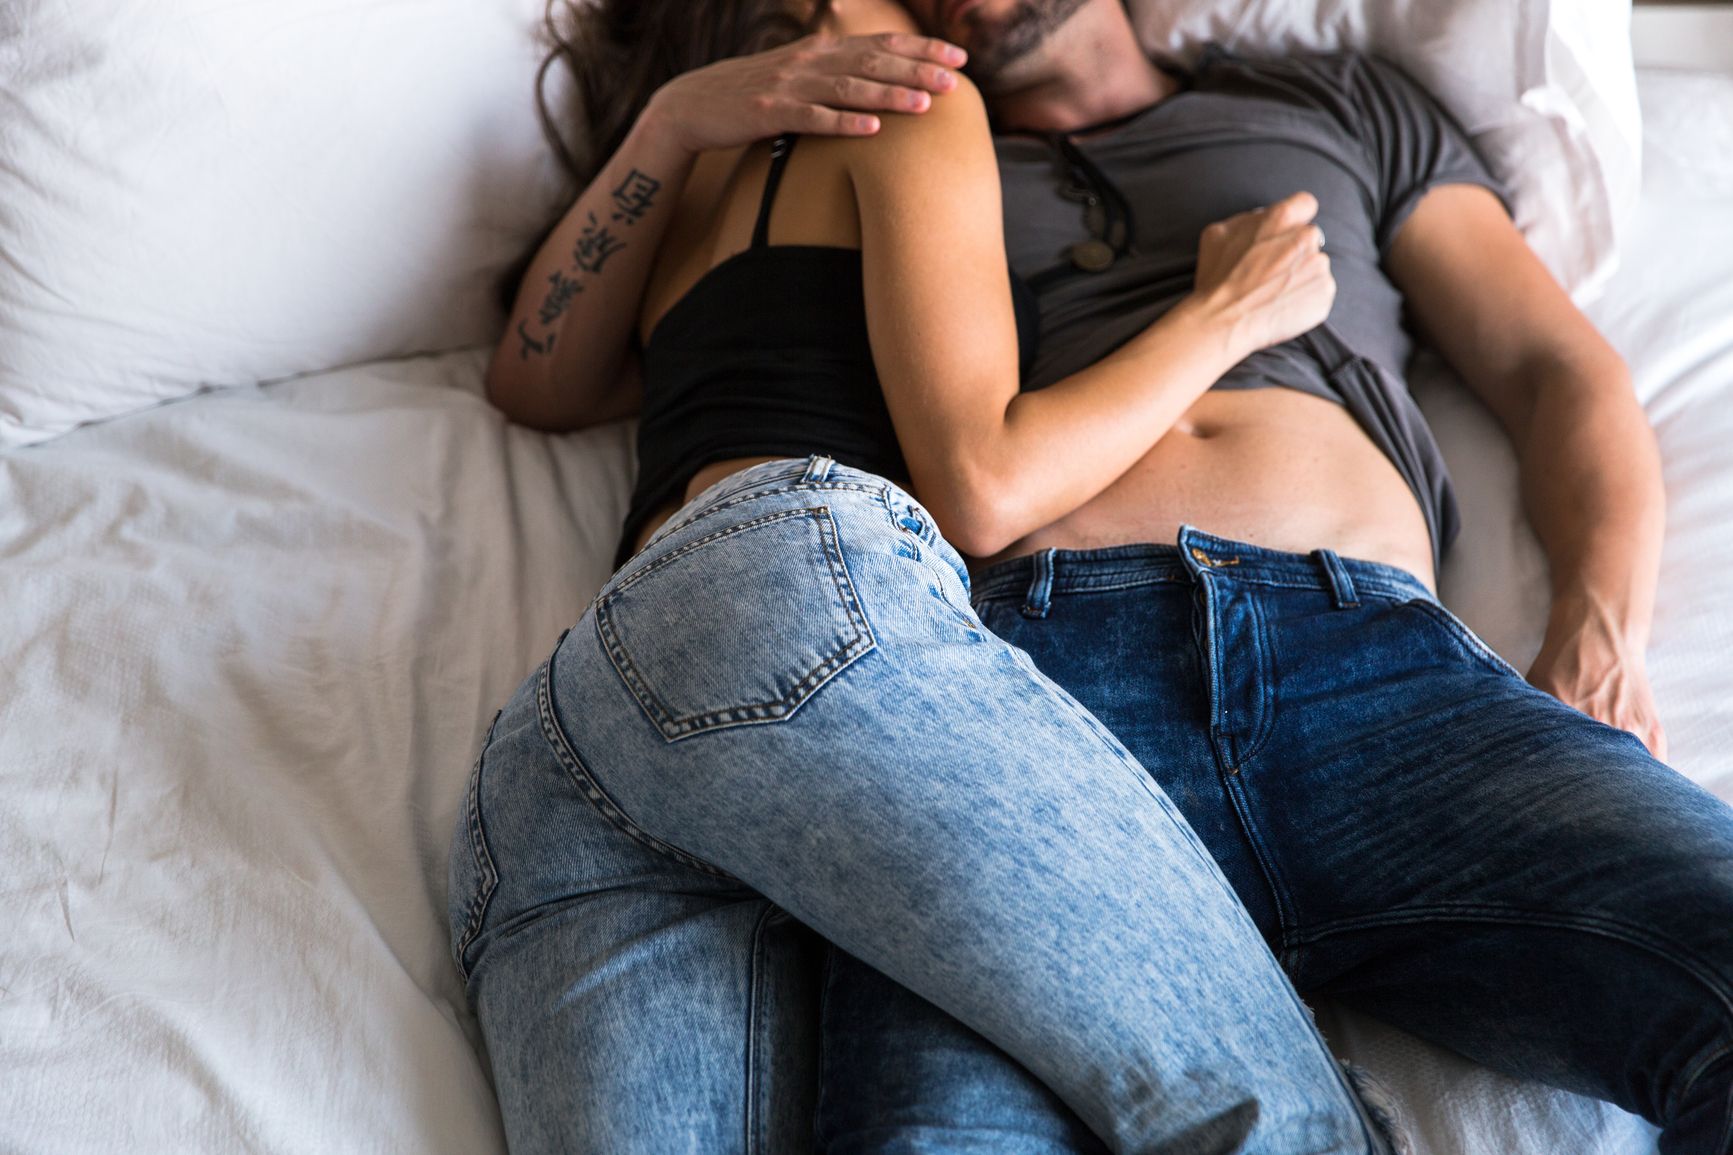 Hot gifte sex tips Porno bilder